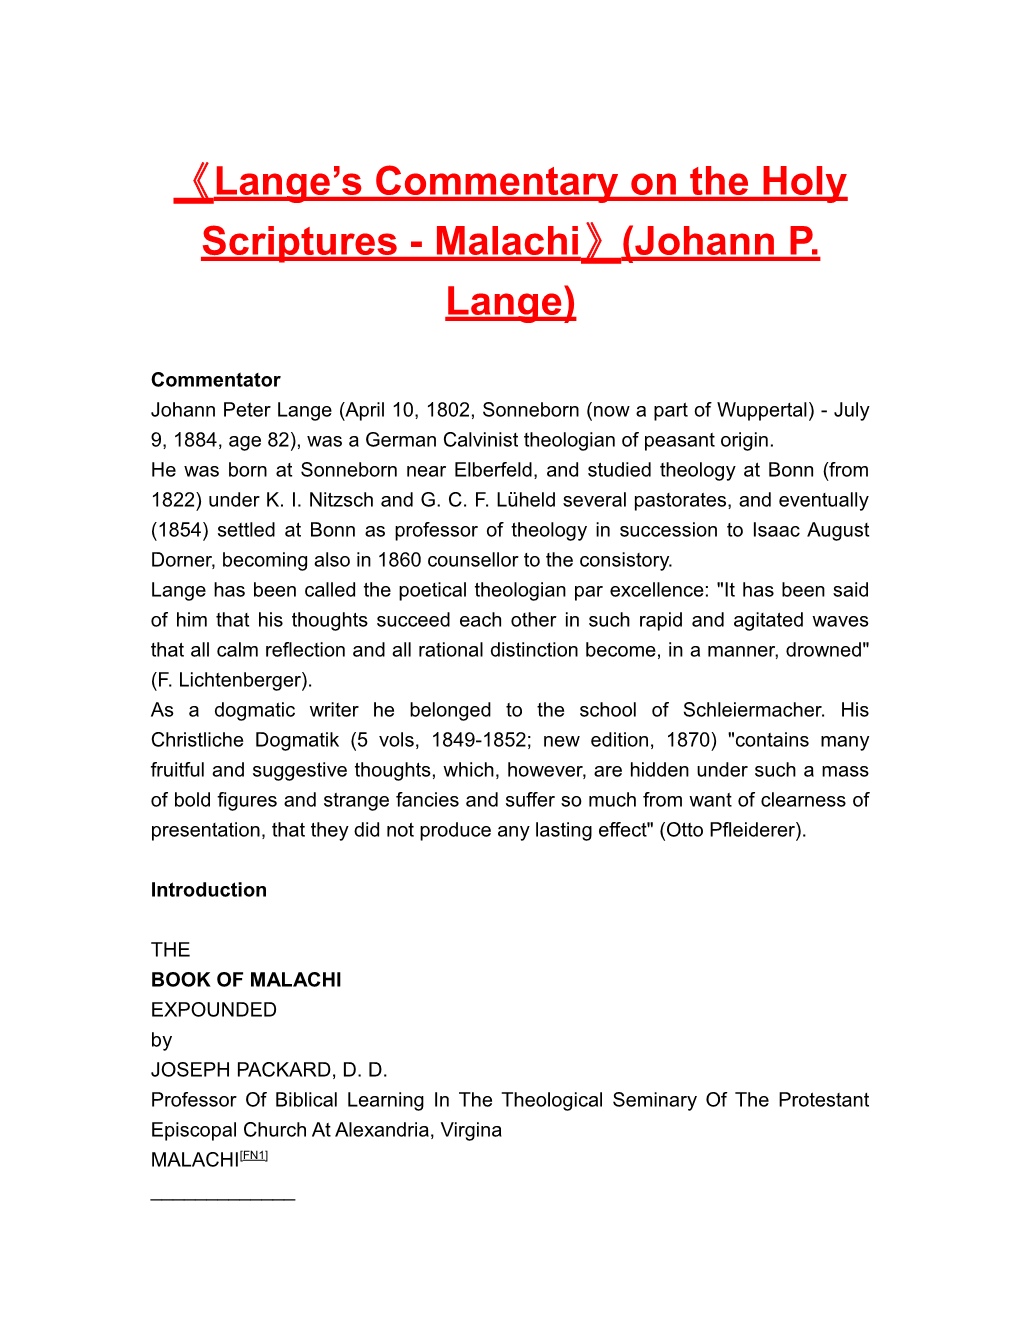 Lange S Commentary on the Holyscriptures-Malachi (Johann P. Lange)